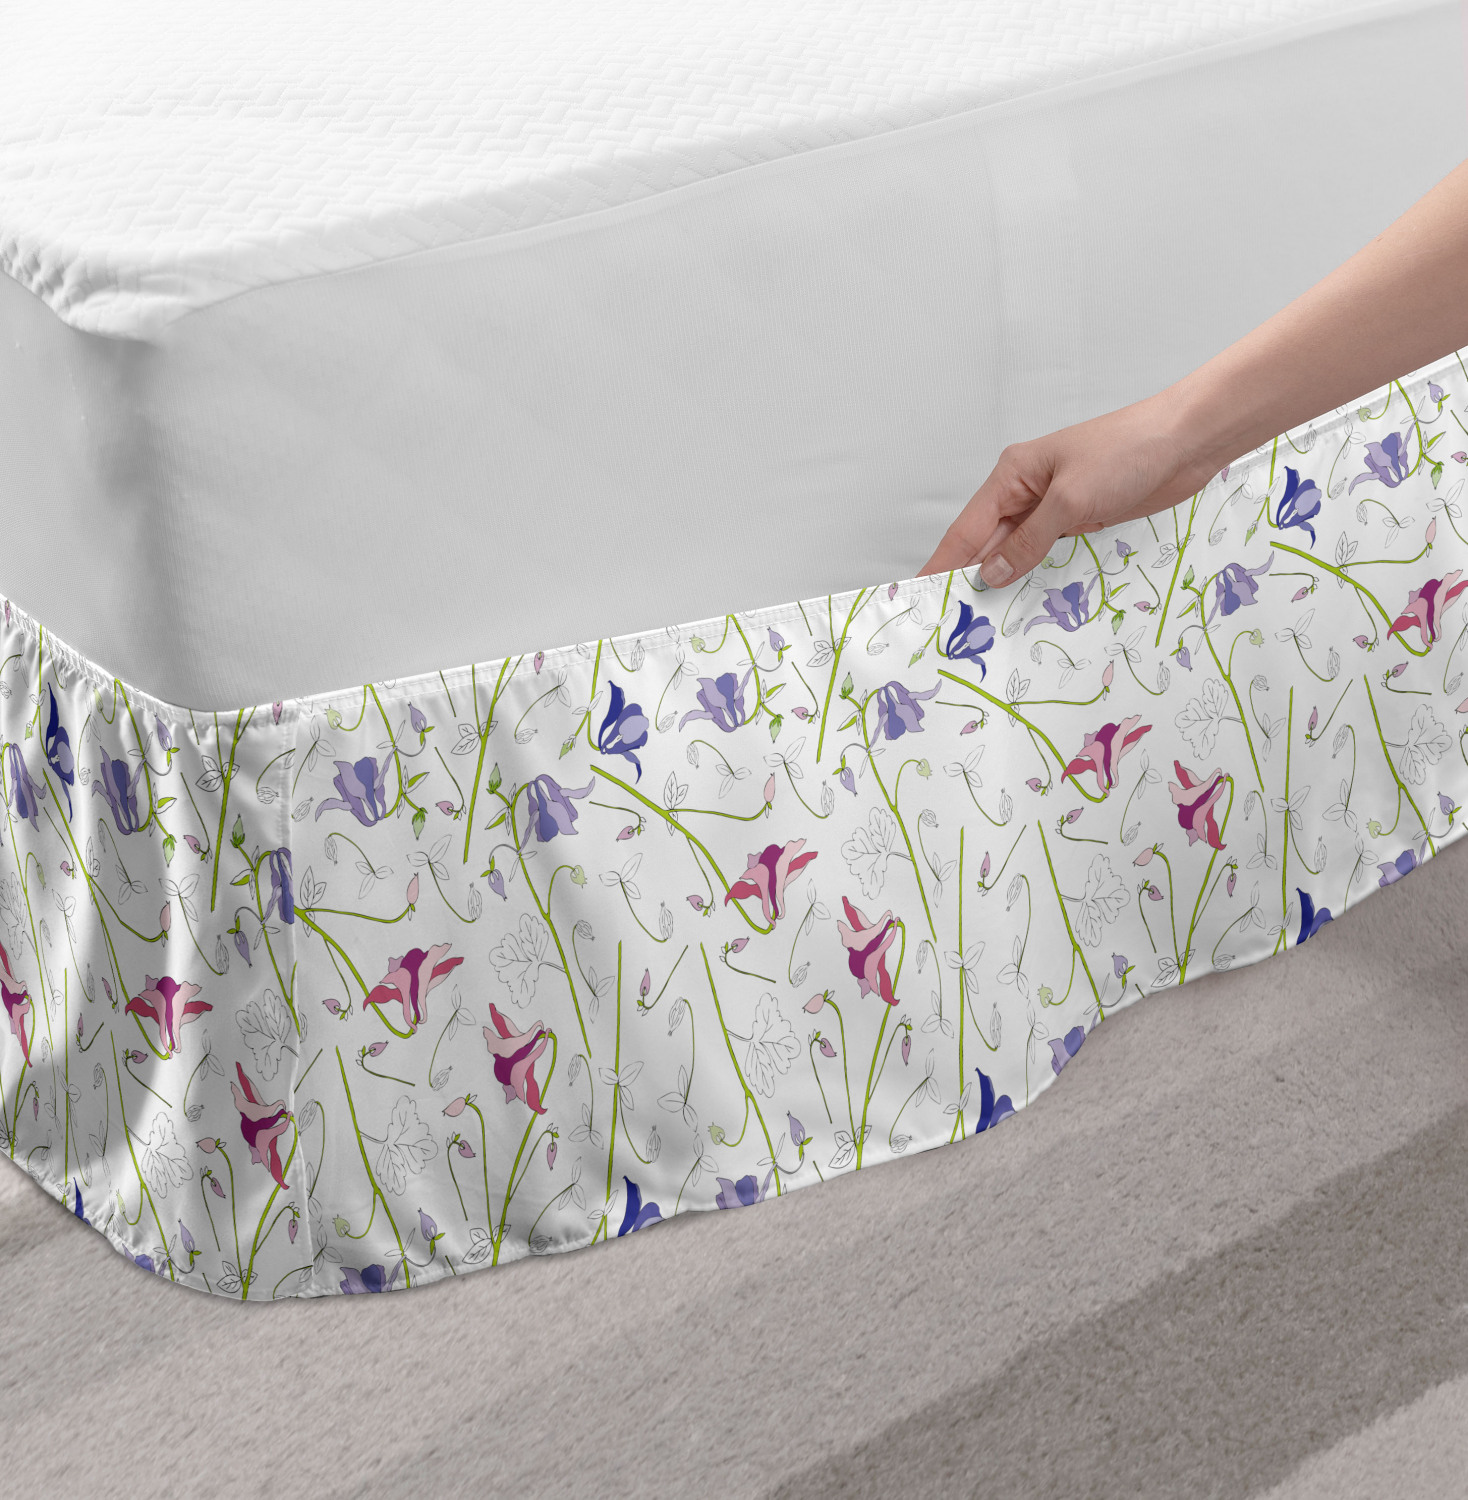 Details about   Ambesonne Vivid Floral Bedskirt Elastic Wrap Around Skirt Gathered Design 